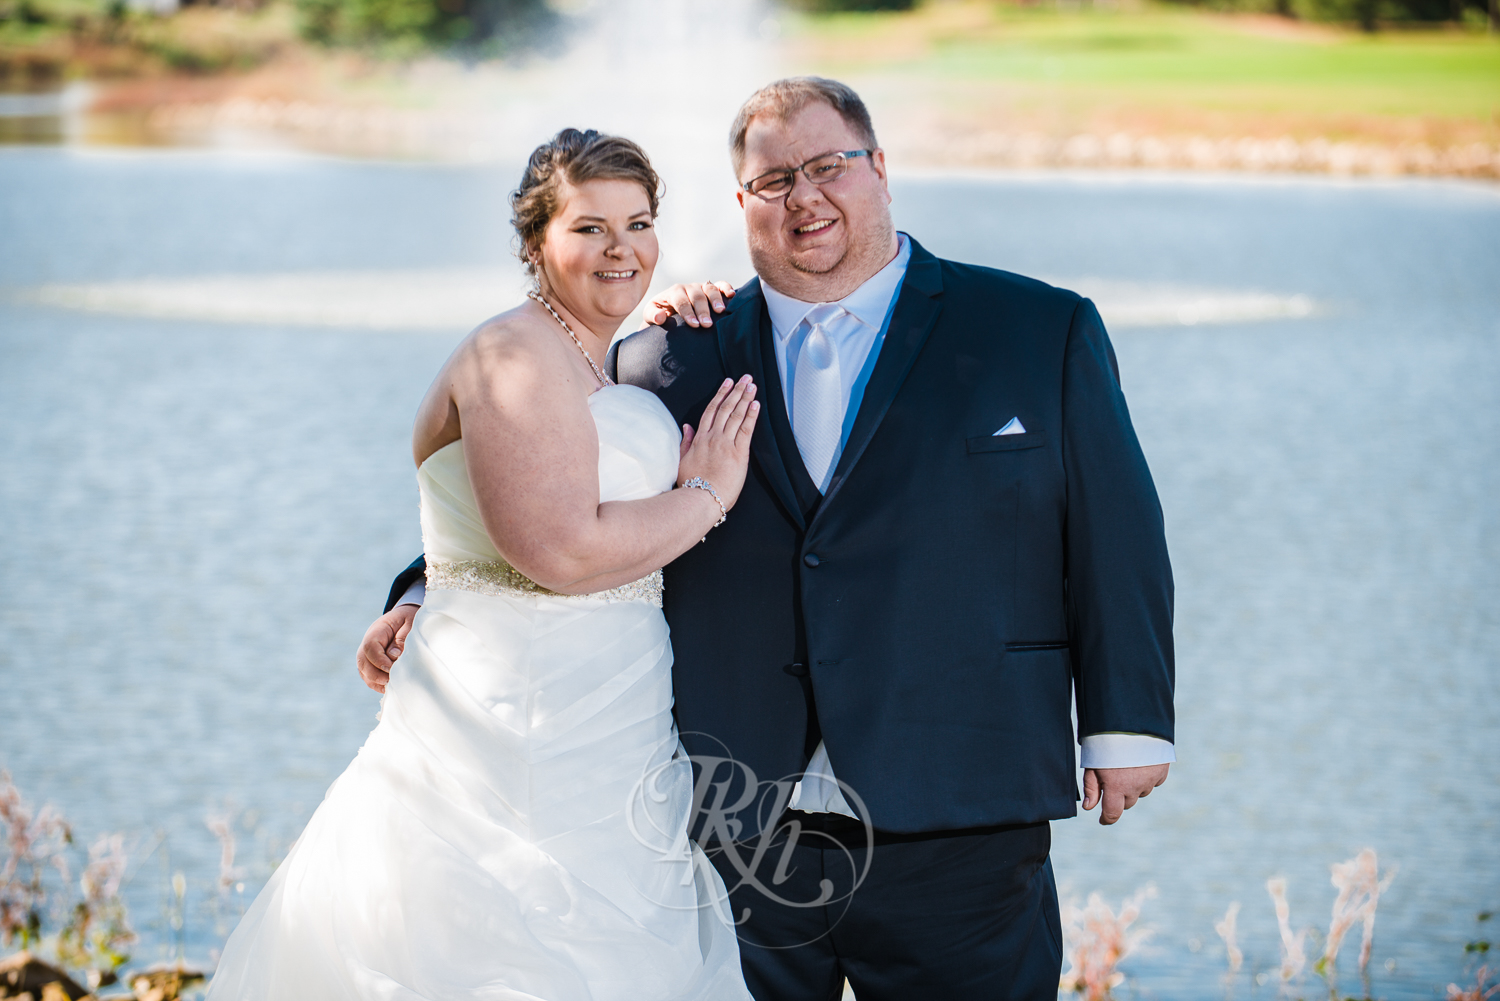  Woodbury Wedding Photography - Amber & Tristan - RKH Images-24 